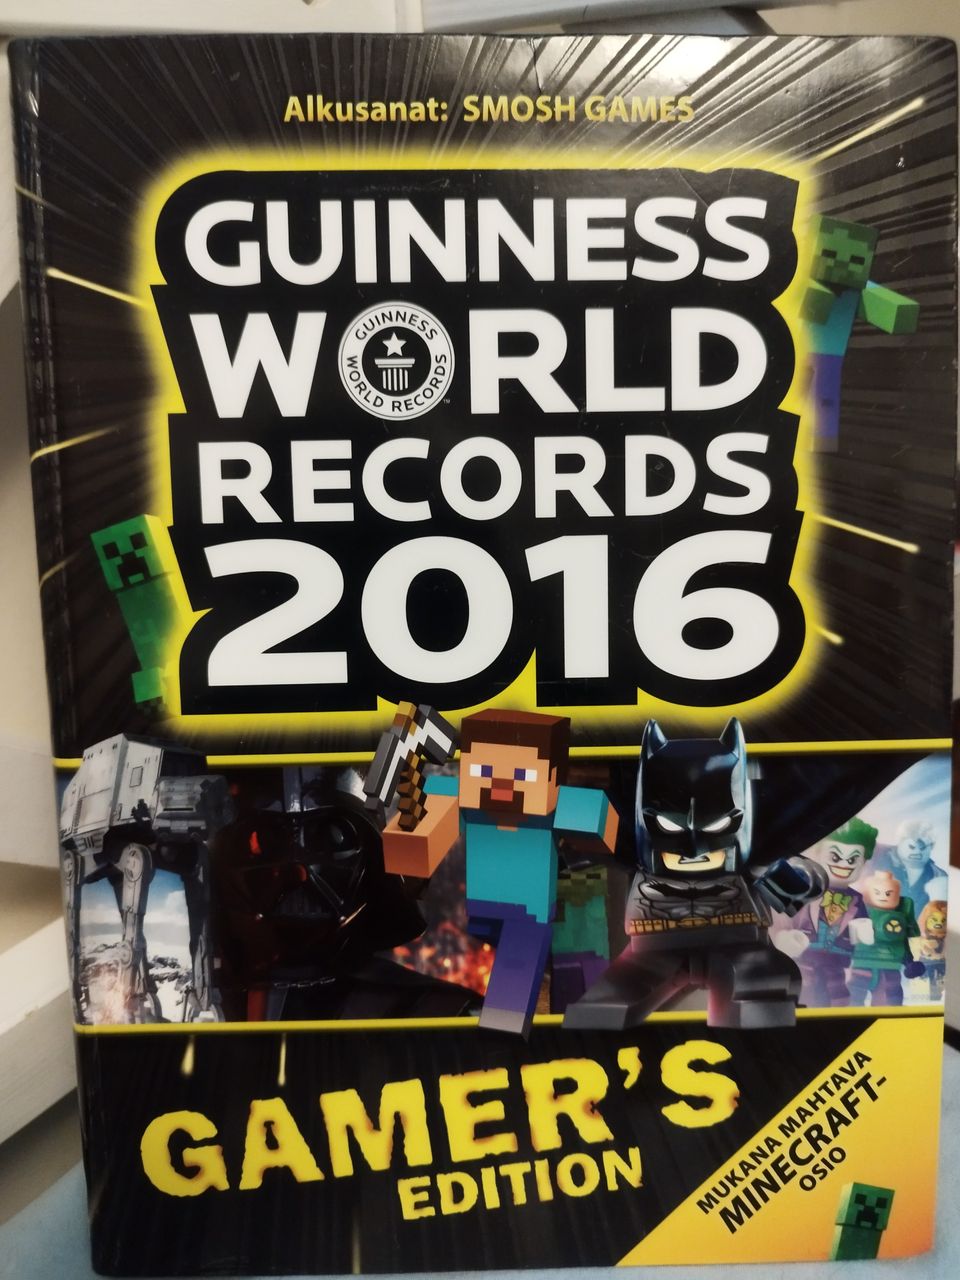 Guinness World Records 2016 Gamer's edition